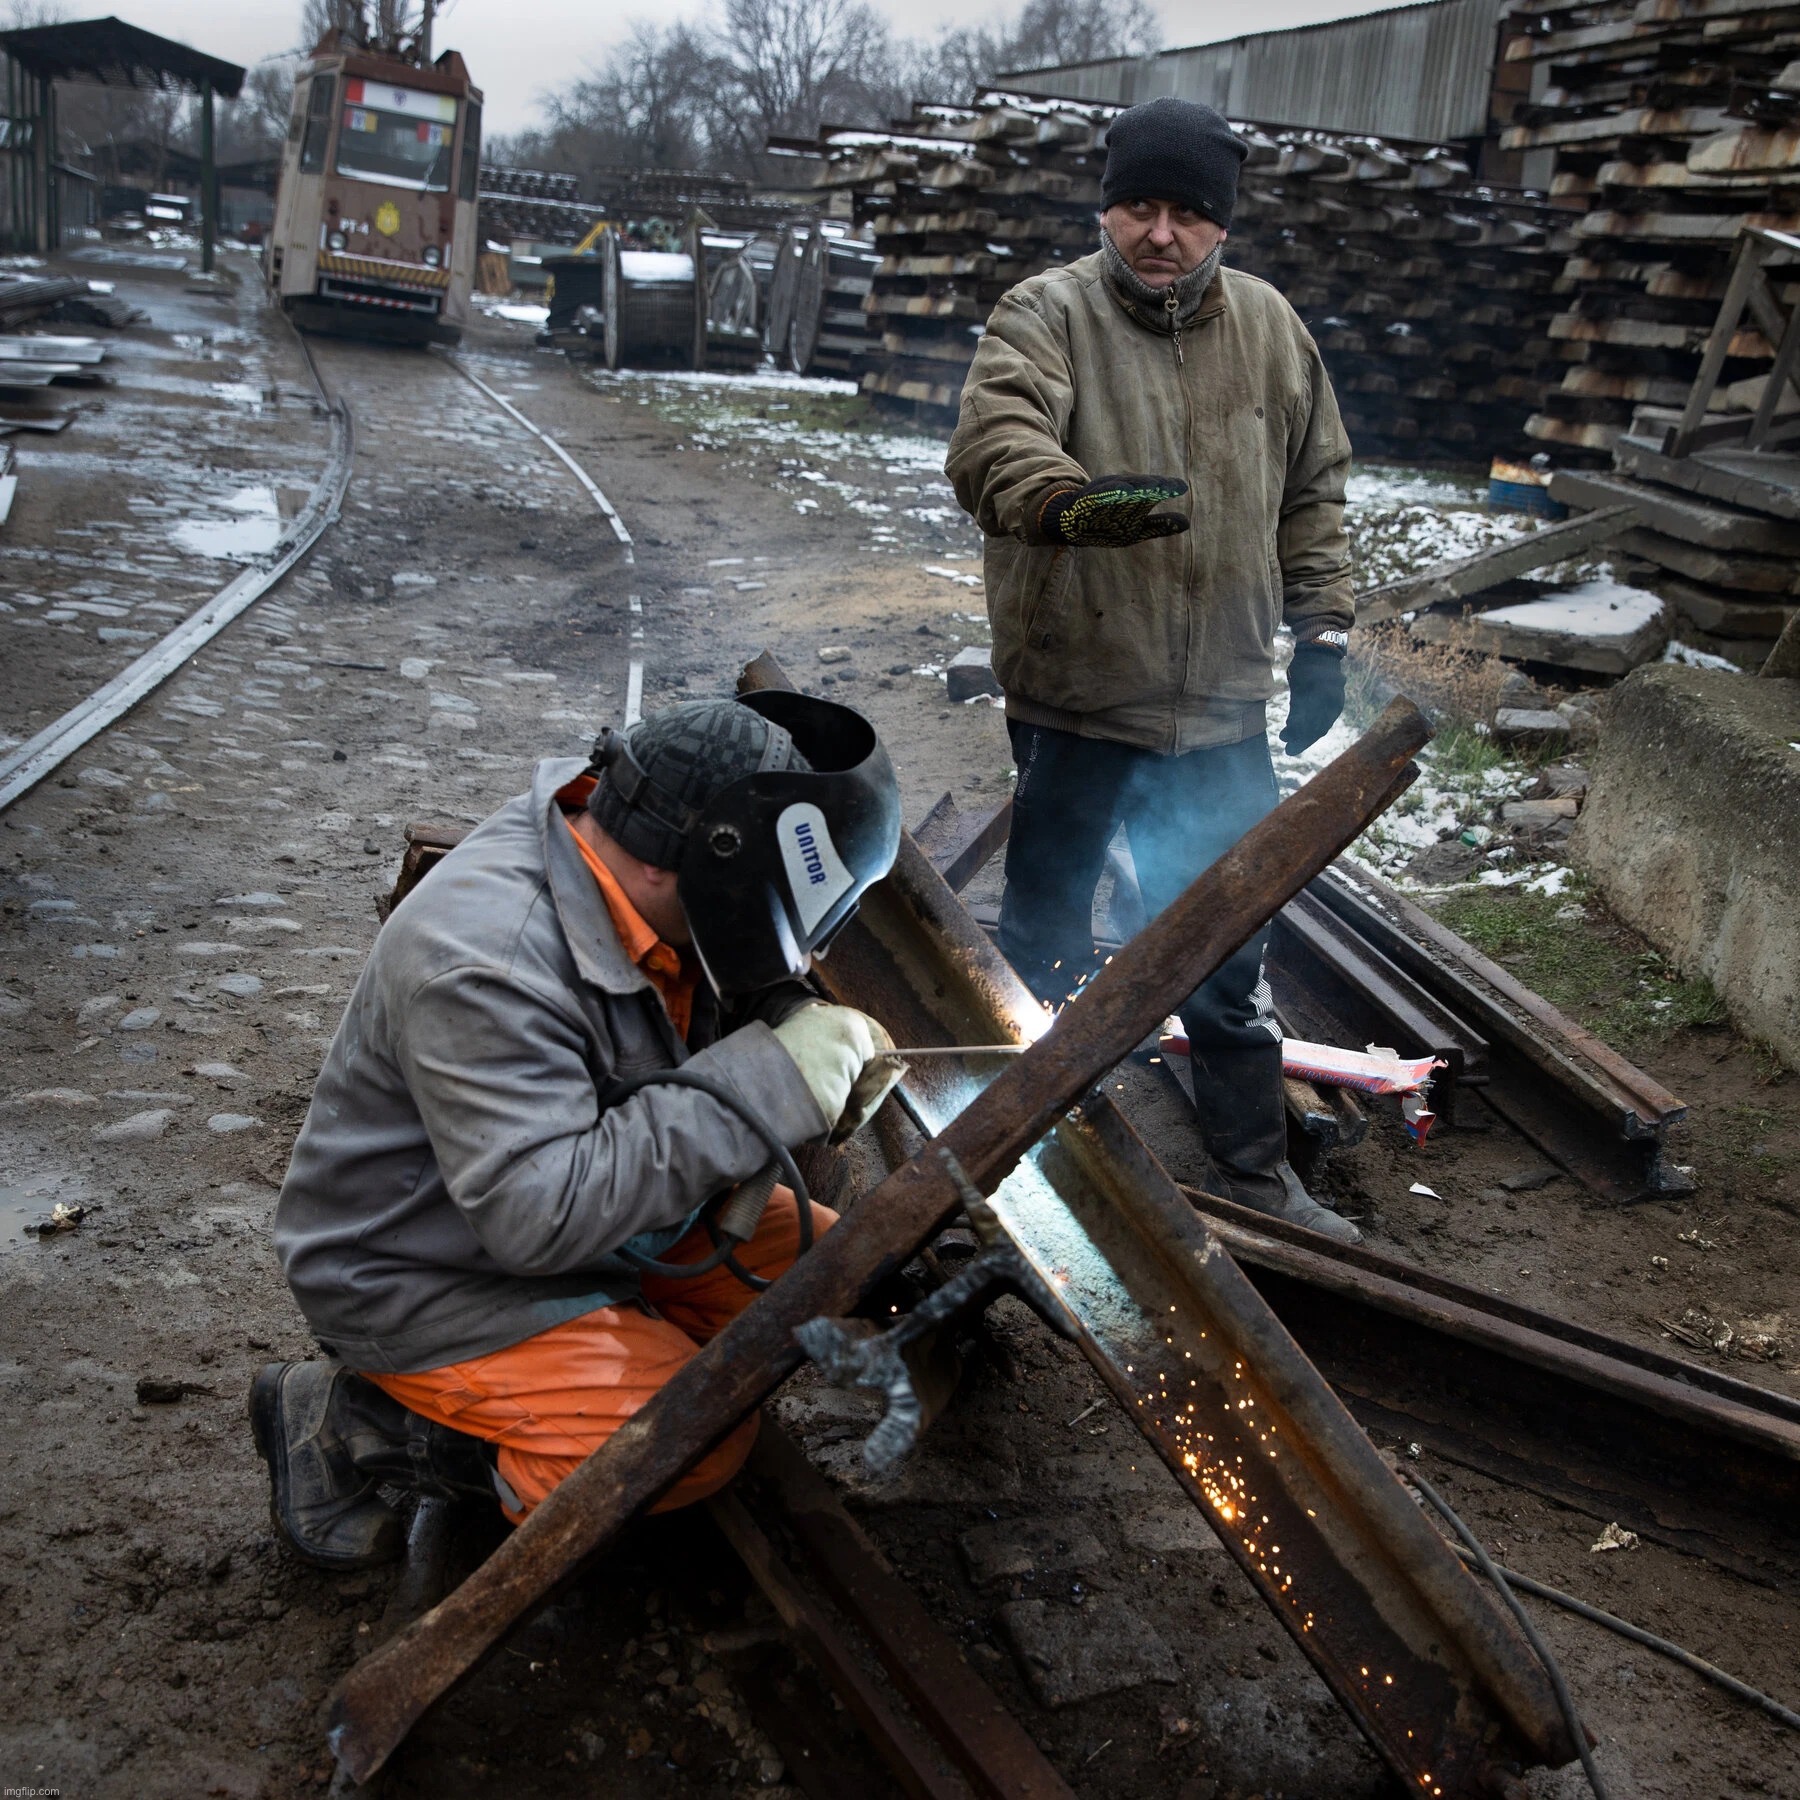 Ukrainians welding barricades to impede the Russian invasion. | image tagged in ukrainian welders,ukraine,russia,ukrainian lives matter,ukrainian,resist | made w/ Imgflip meme maker